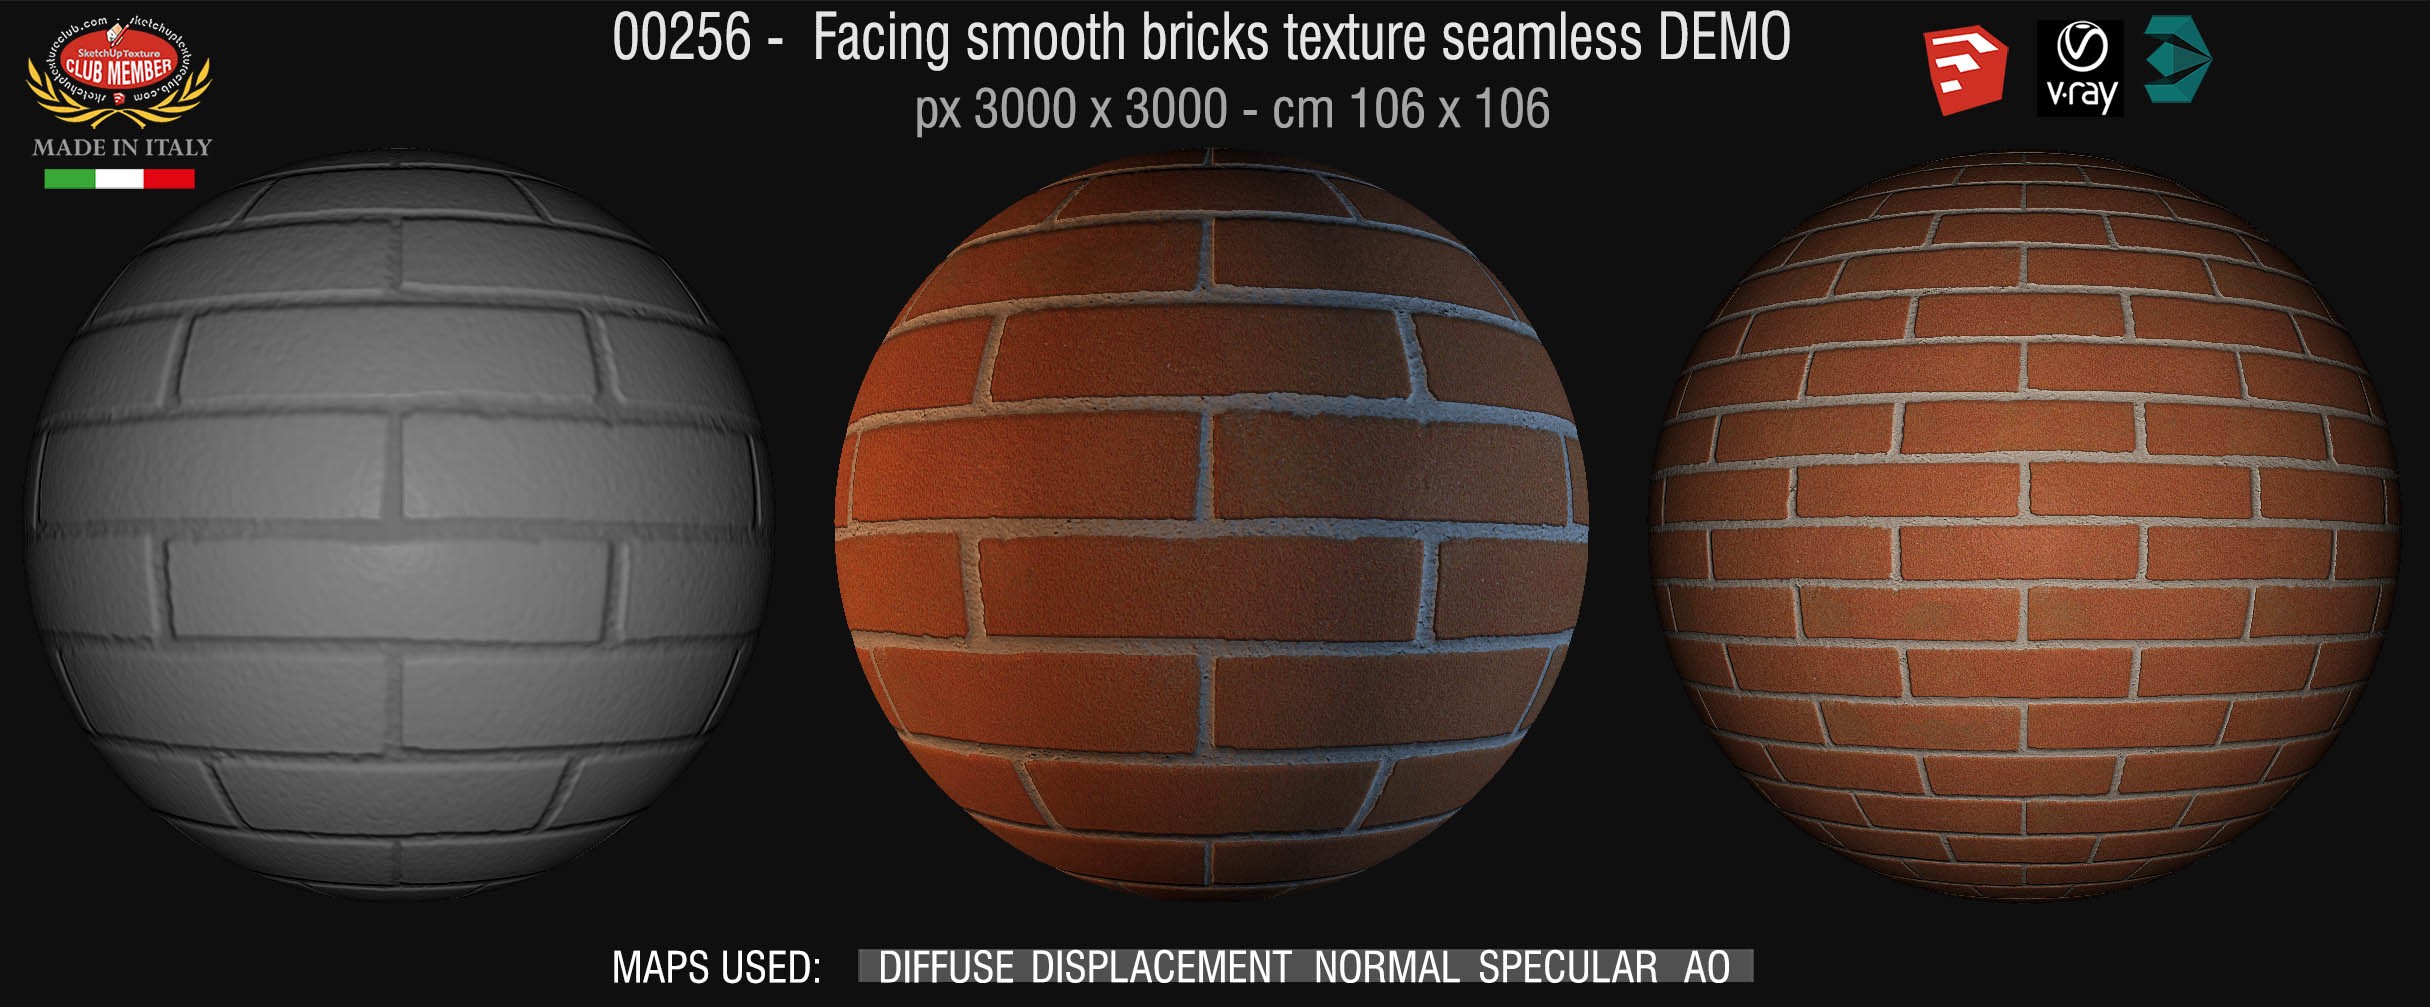 00256 Facing smooth bricks texture seamless + maps DEMO